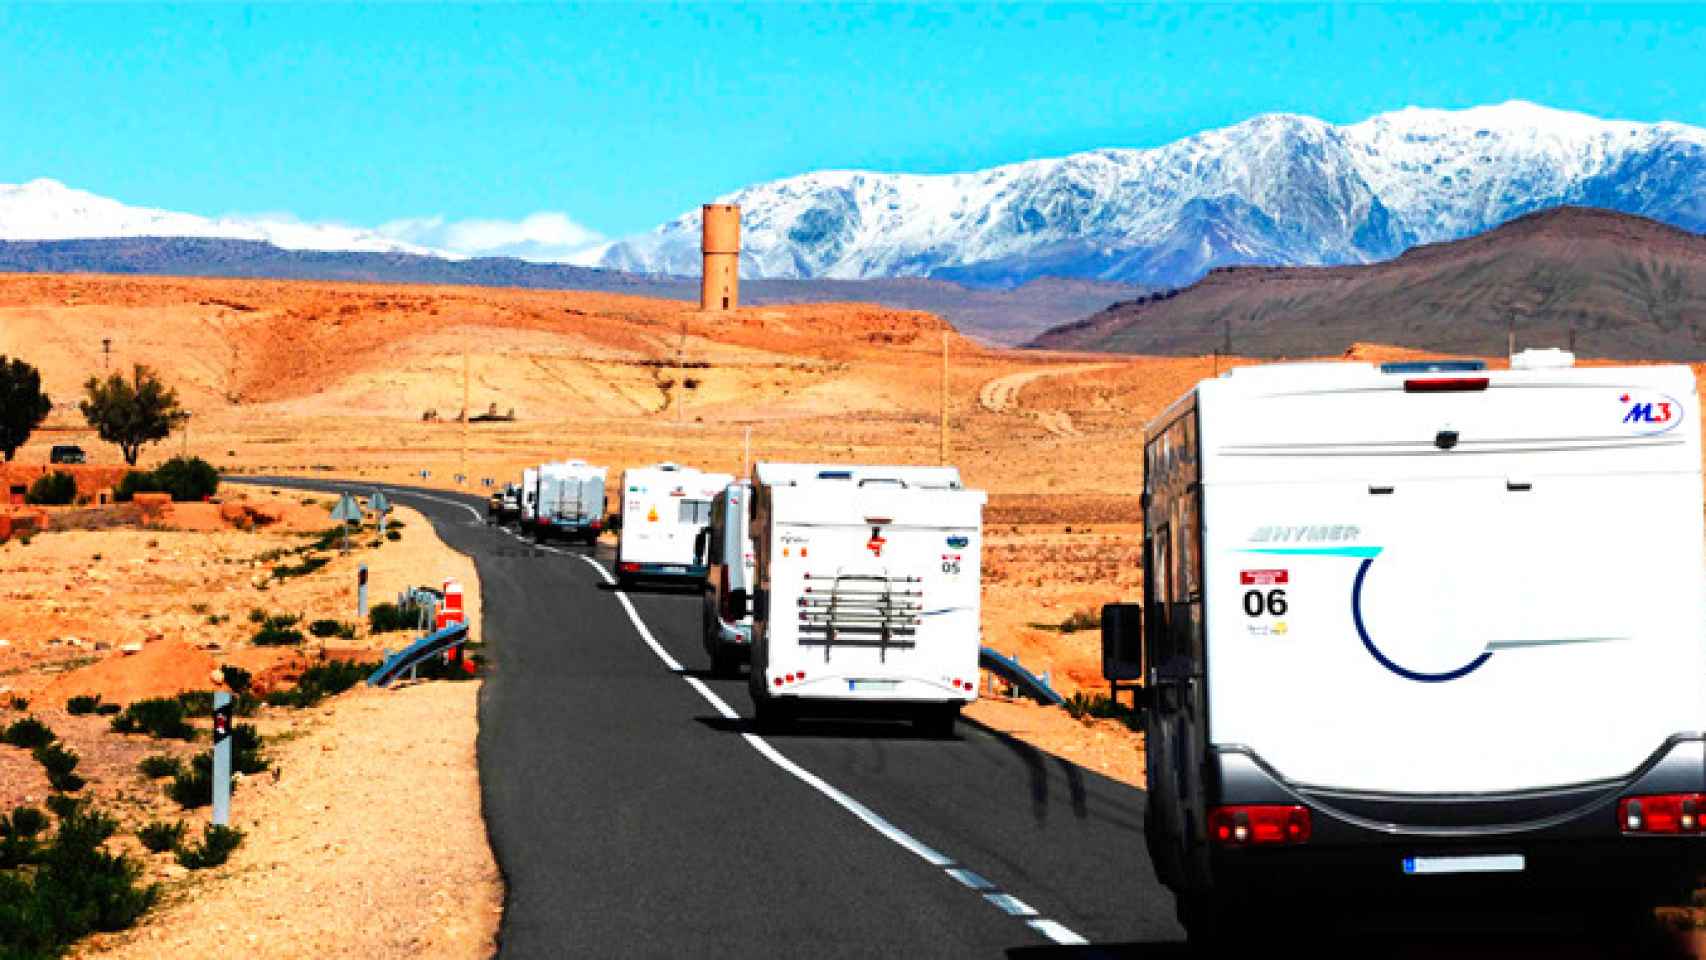 Imagen promocional de Buena ruta / BUENARUTA.ES